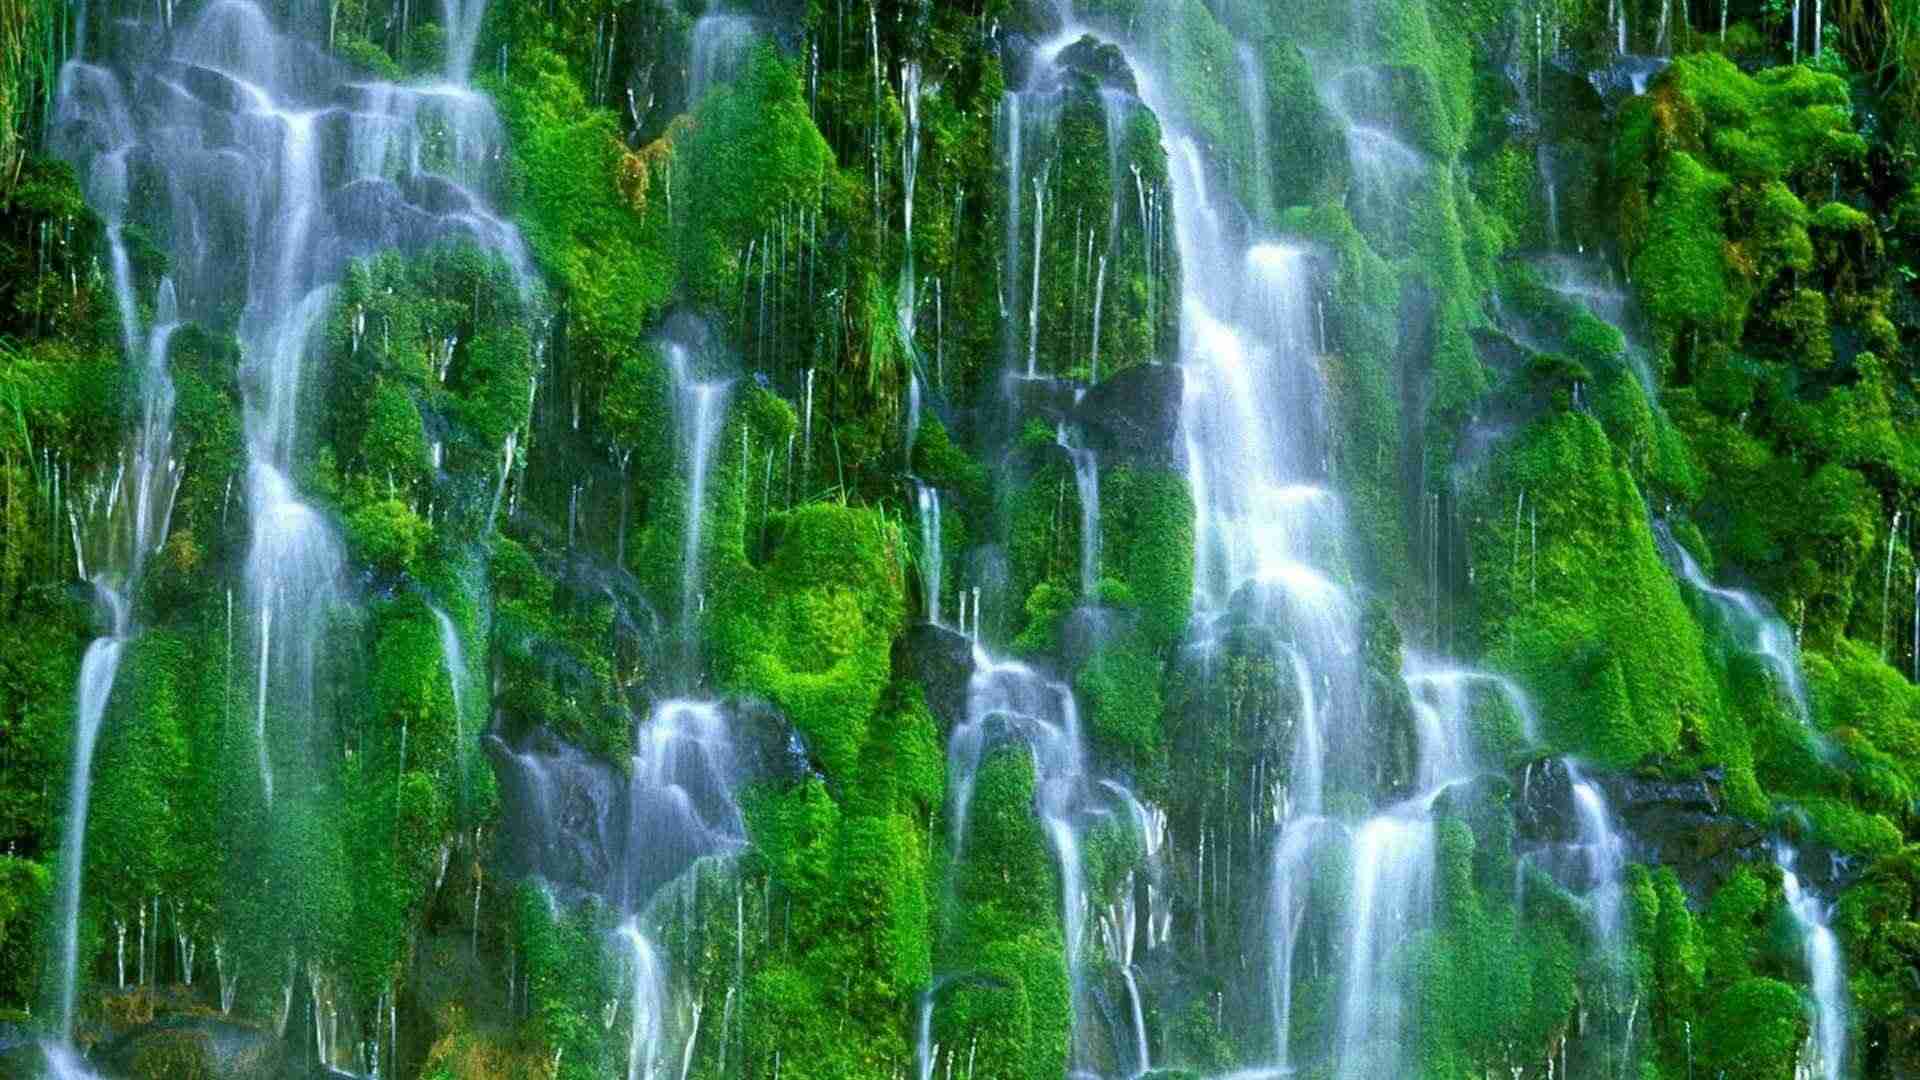 nachural wallpaper free download,waterfall,water resources,natural landscape,nature,water